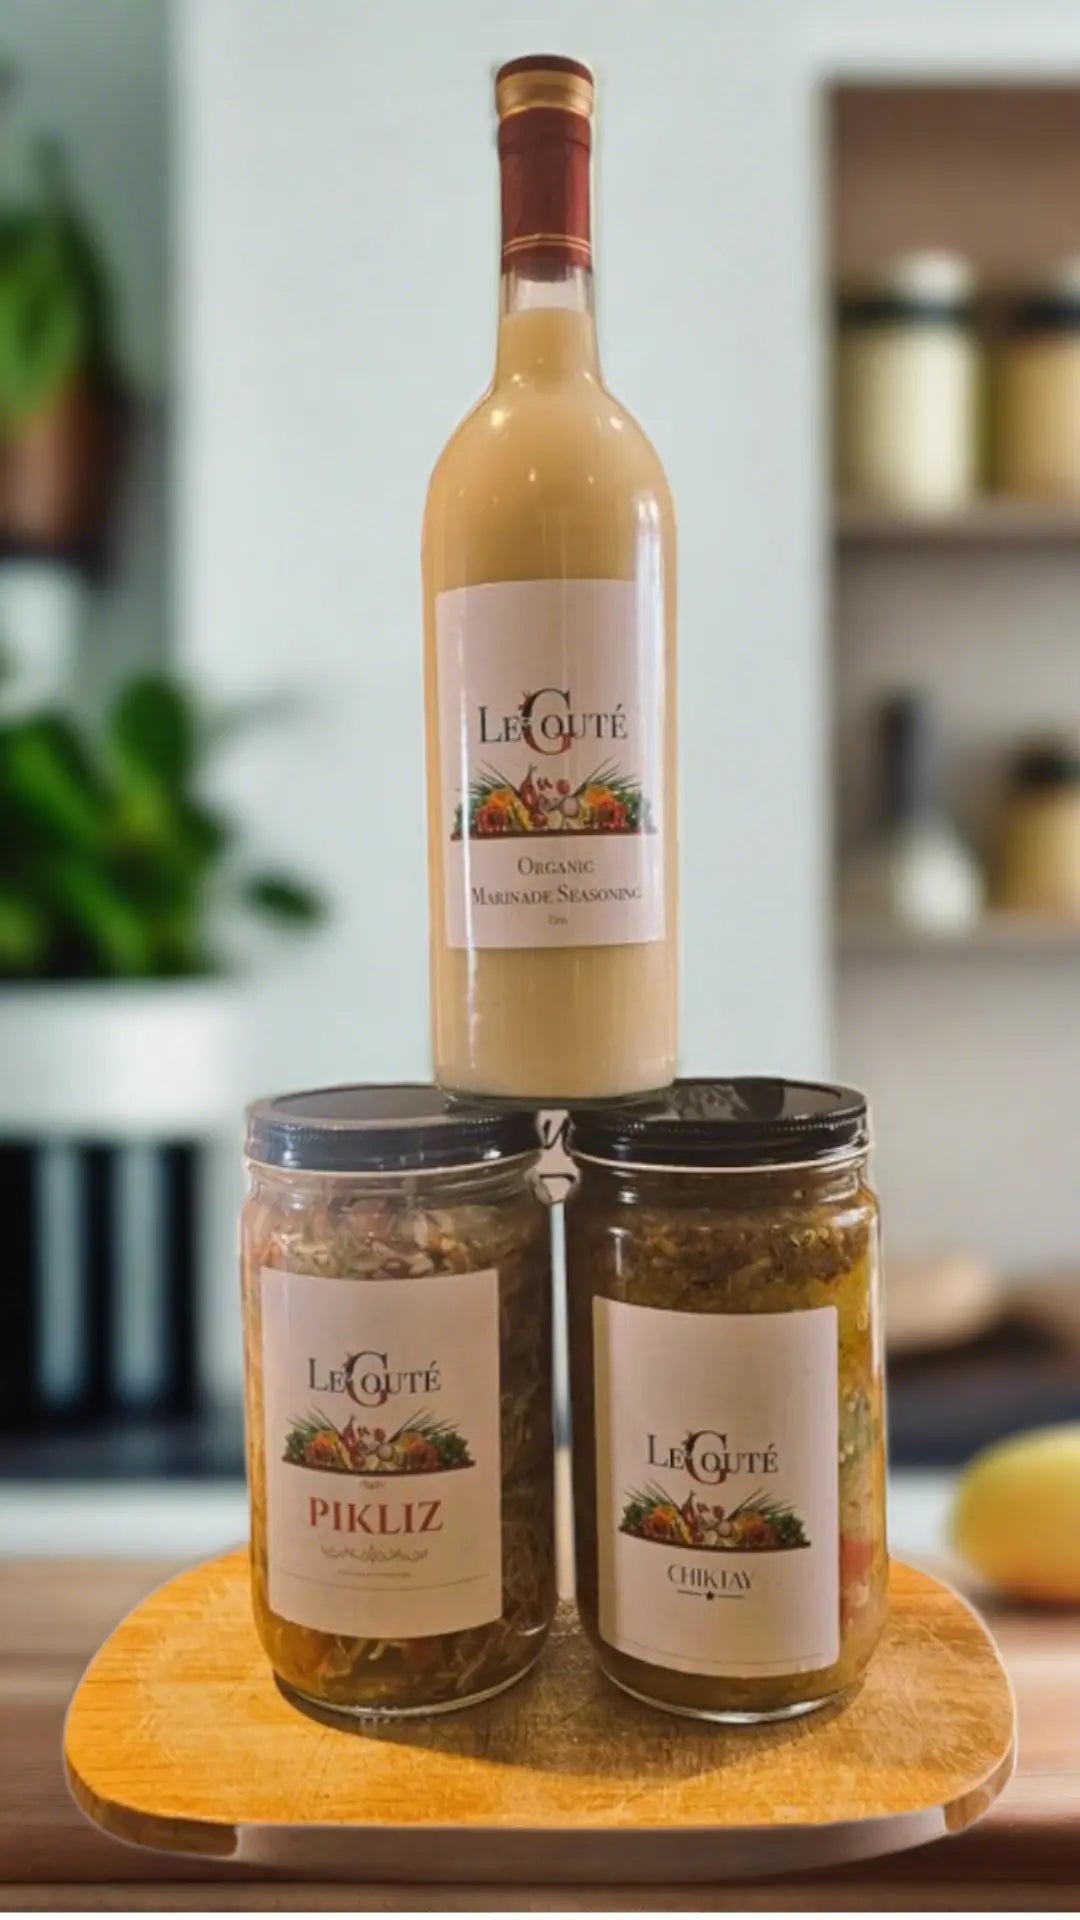 Bundle of Kremas Pilkiz and Chiktay on sale LeGoute natural spice